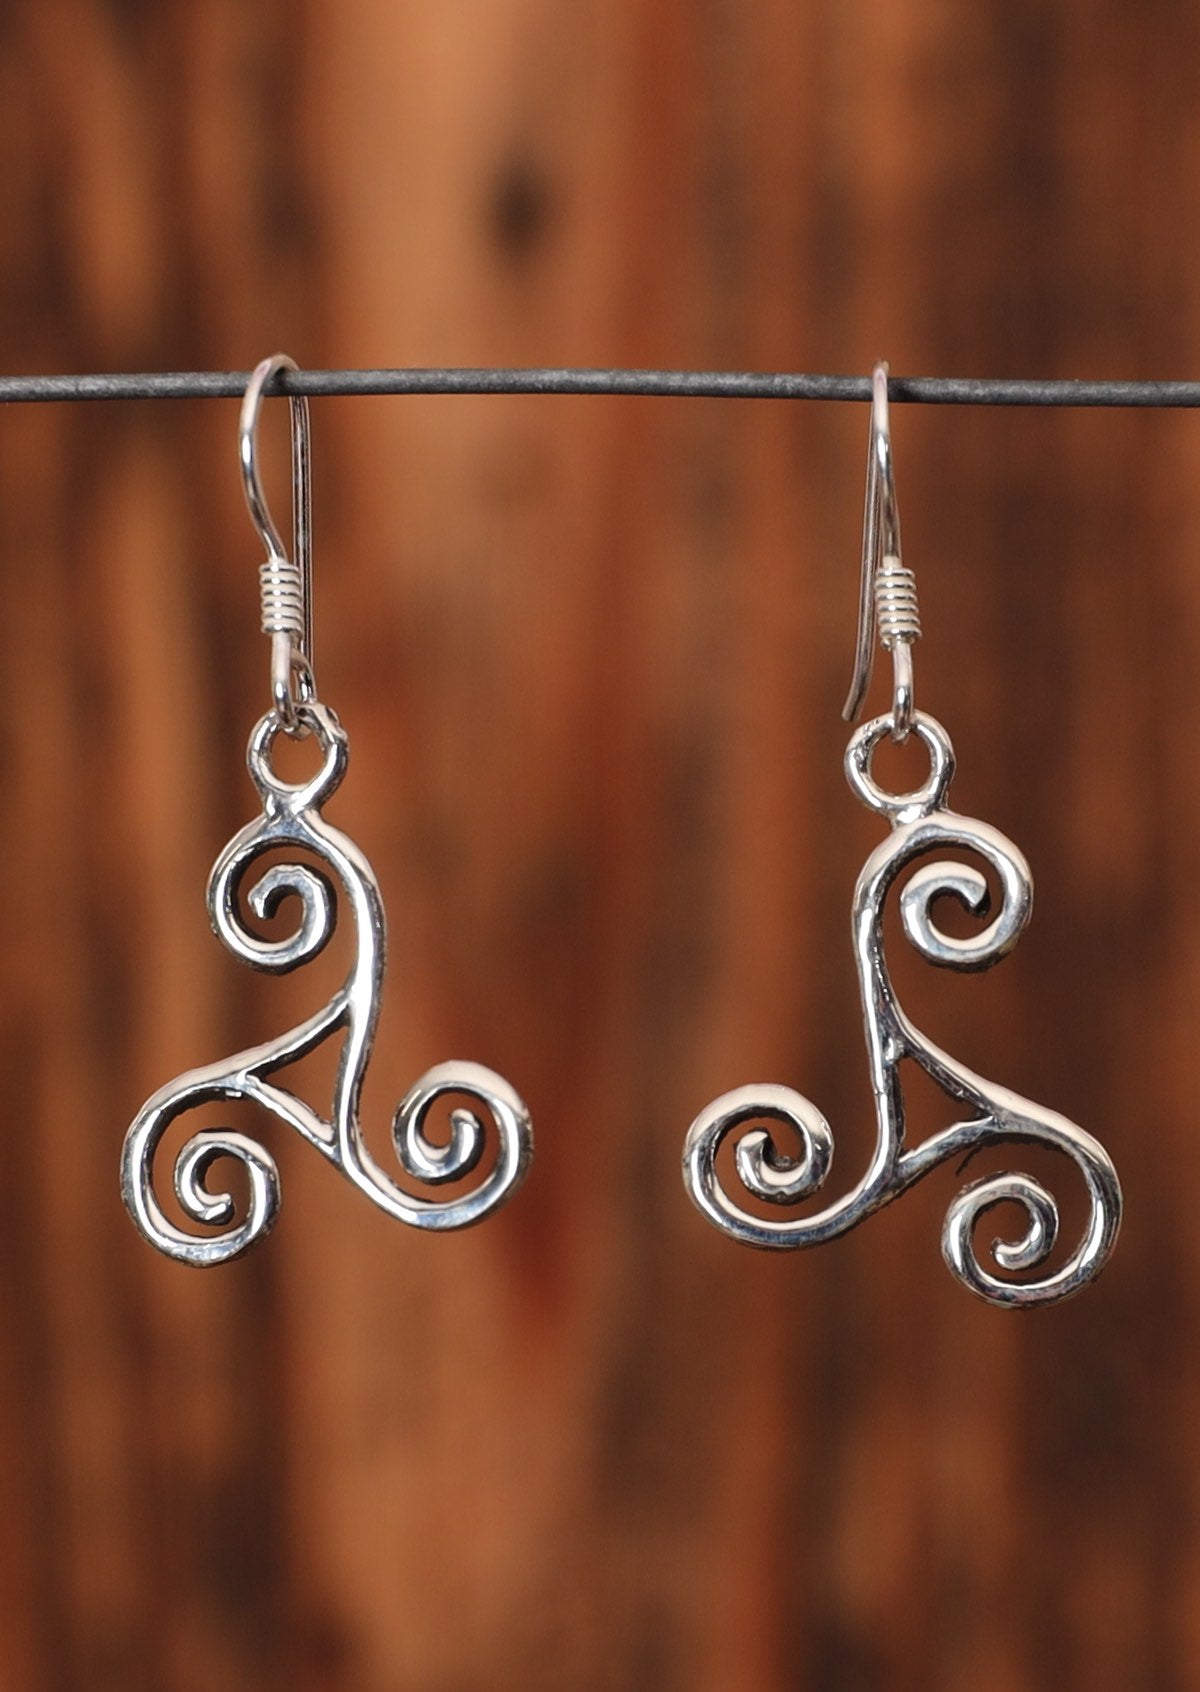 92.5% silver sleek Triskele earrings sit on a wire for display.